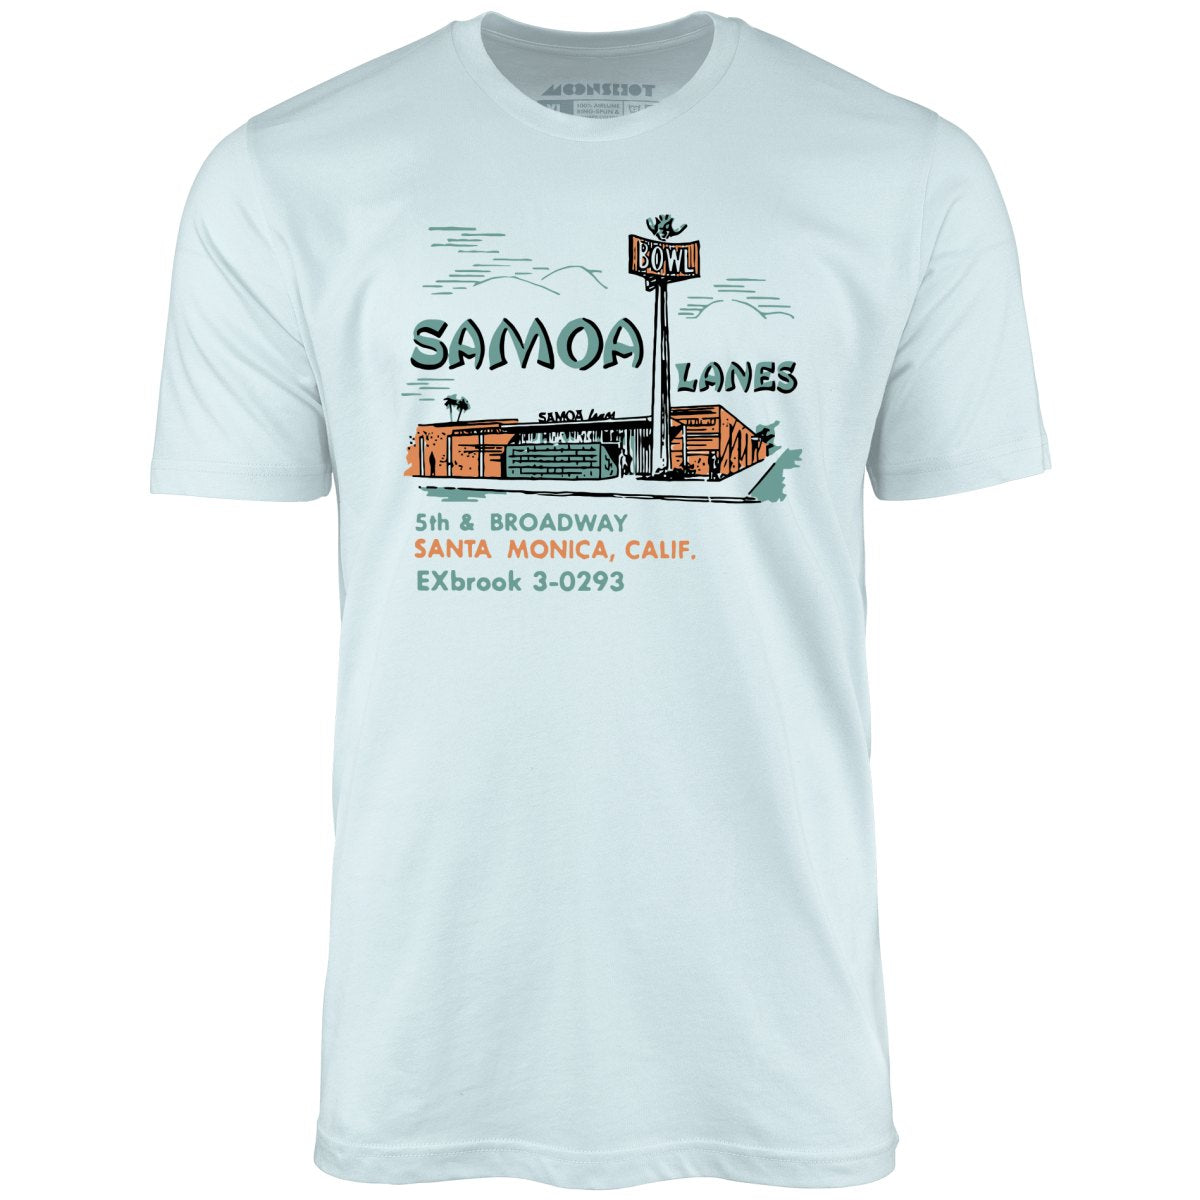 Samoa Lanes - Santa Monica, CA - Vintage Bowling Alley - Unisex T-Shirt